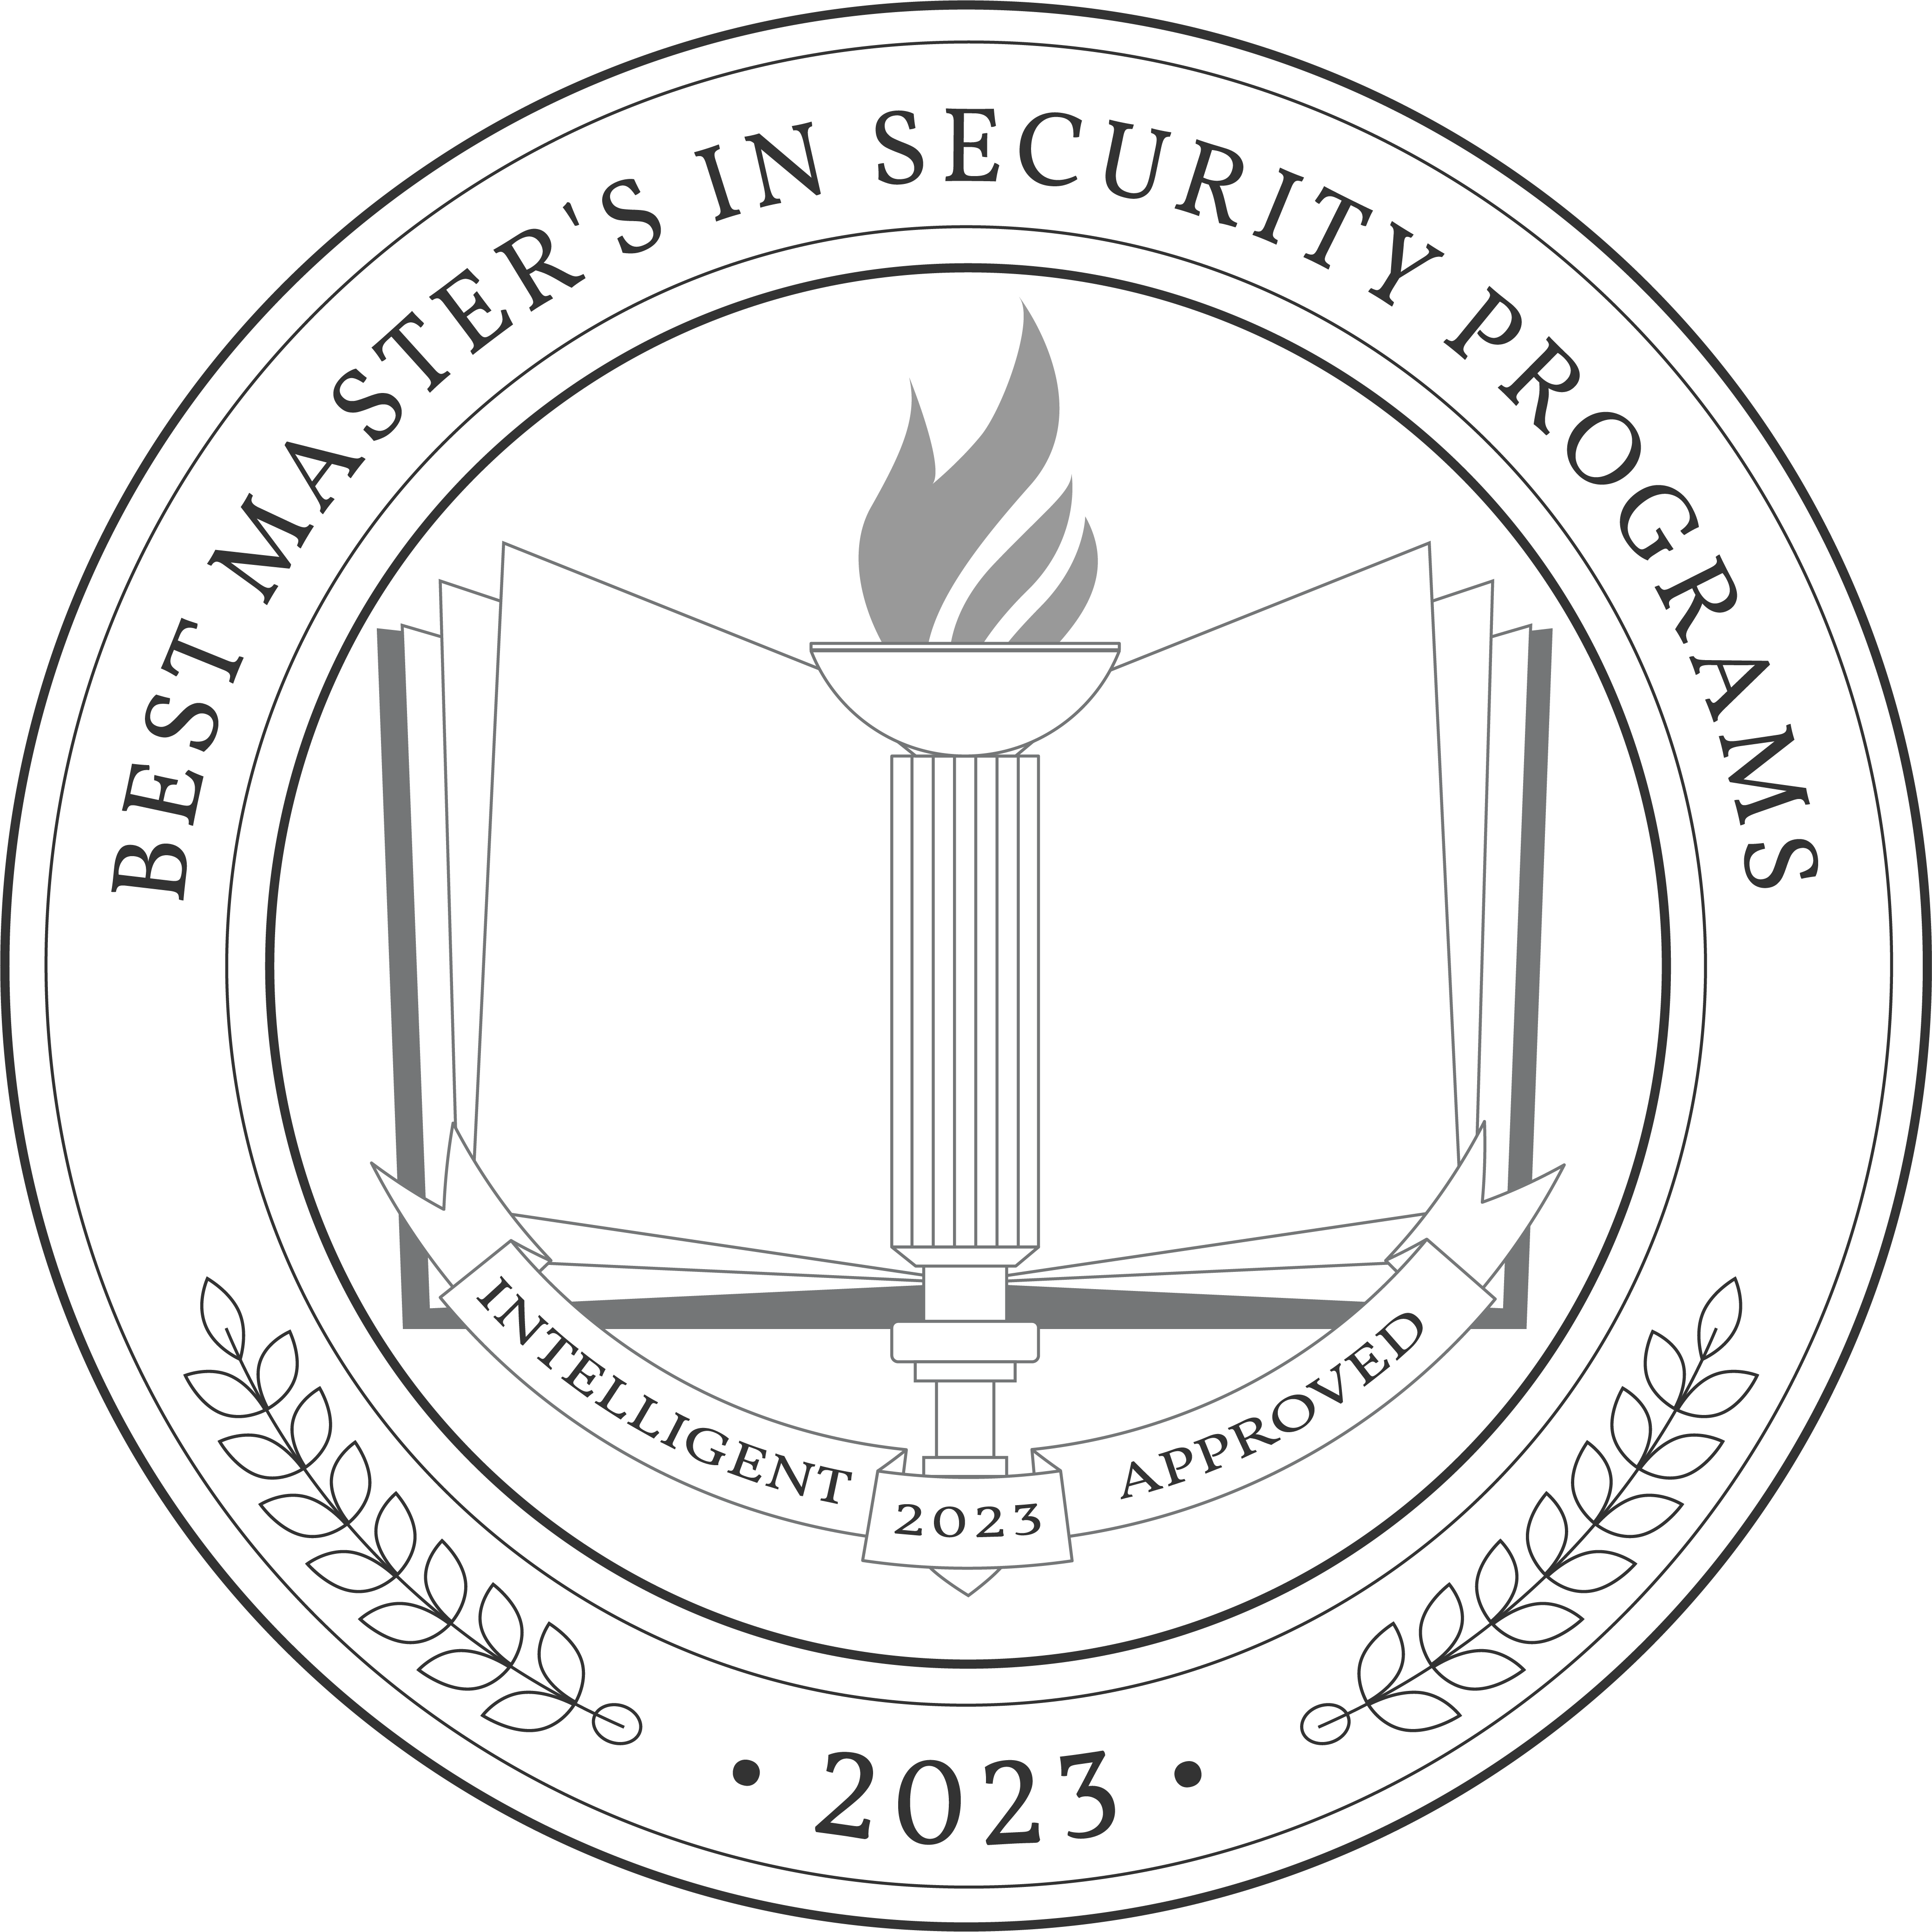 Best Master's in Security Programs 2023